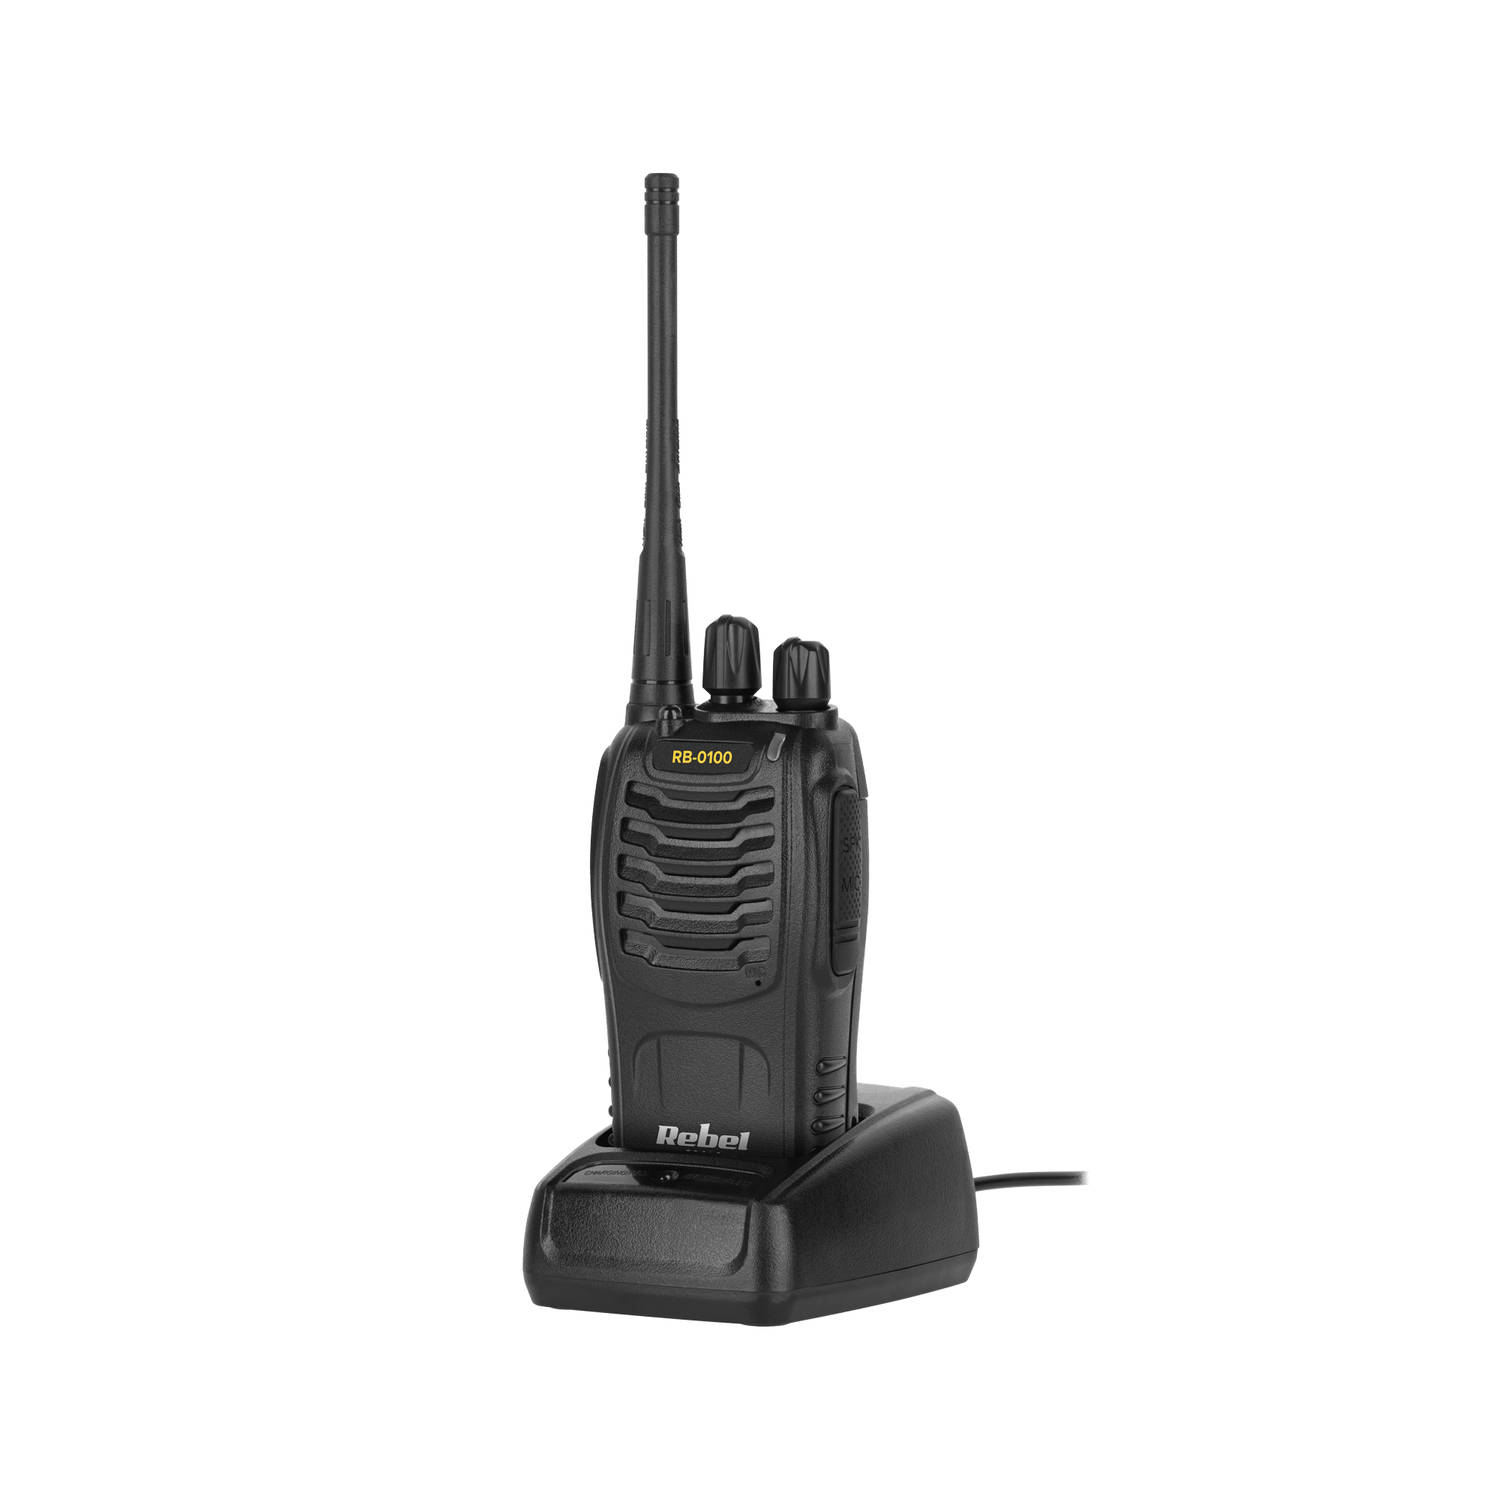 Rebel PMR RB-100 portofoon walkie talkie handradio 4km bereik VOX 16 kanalen 450Mhz